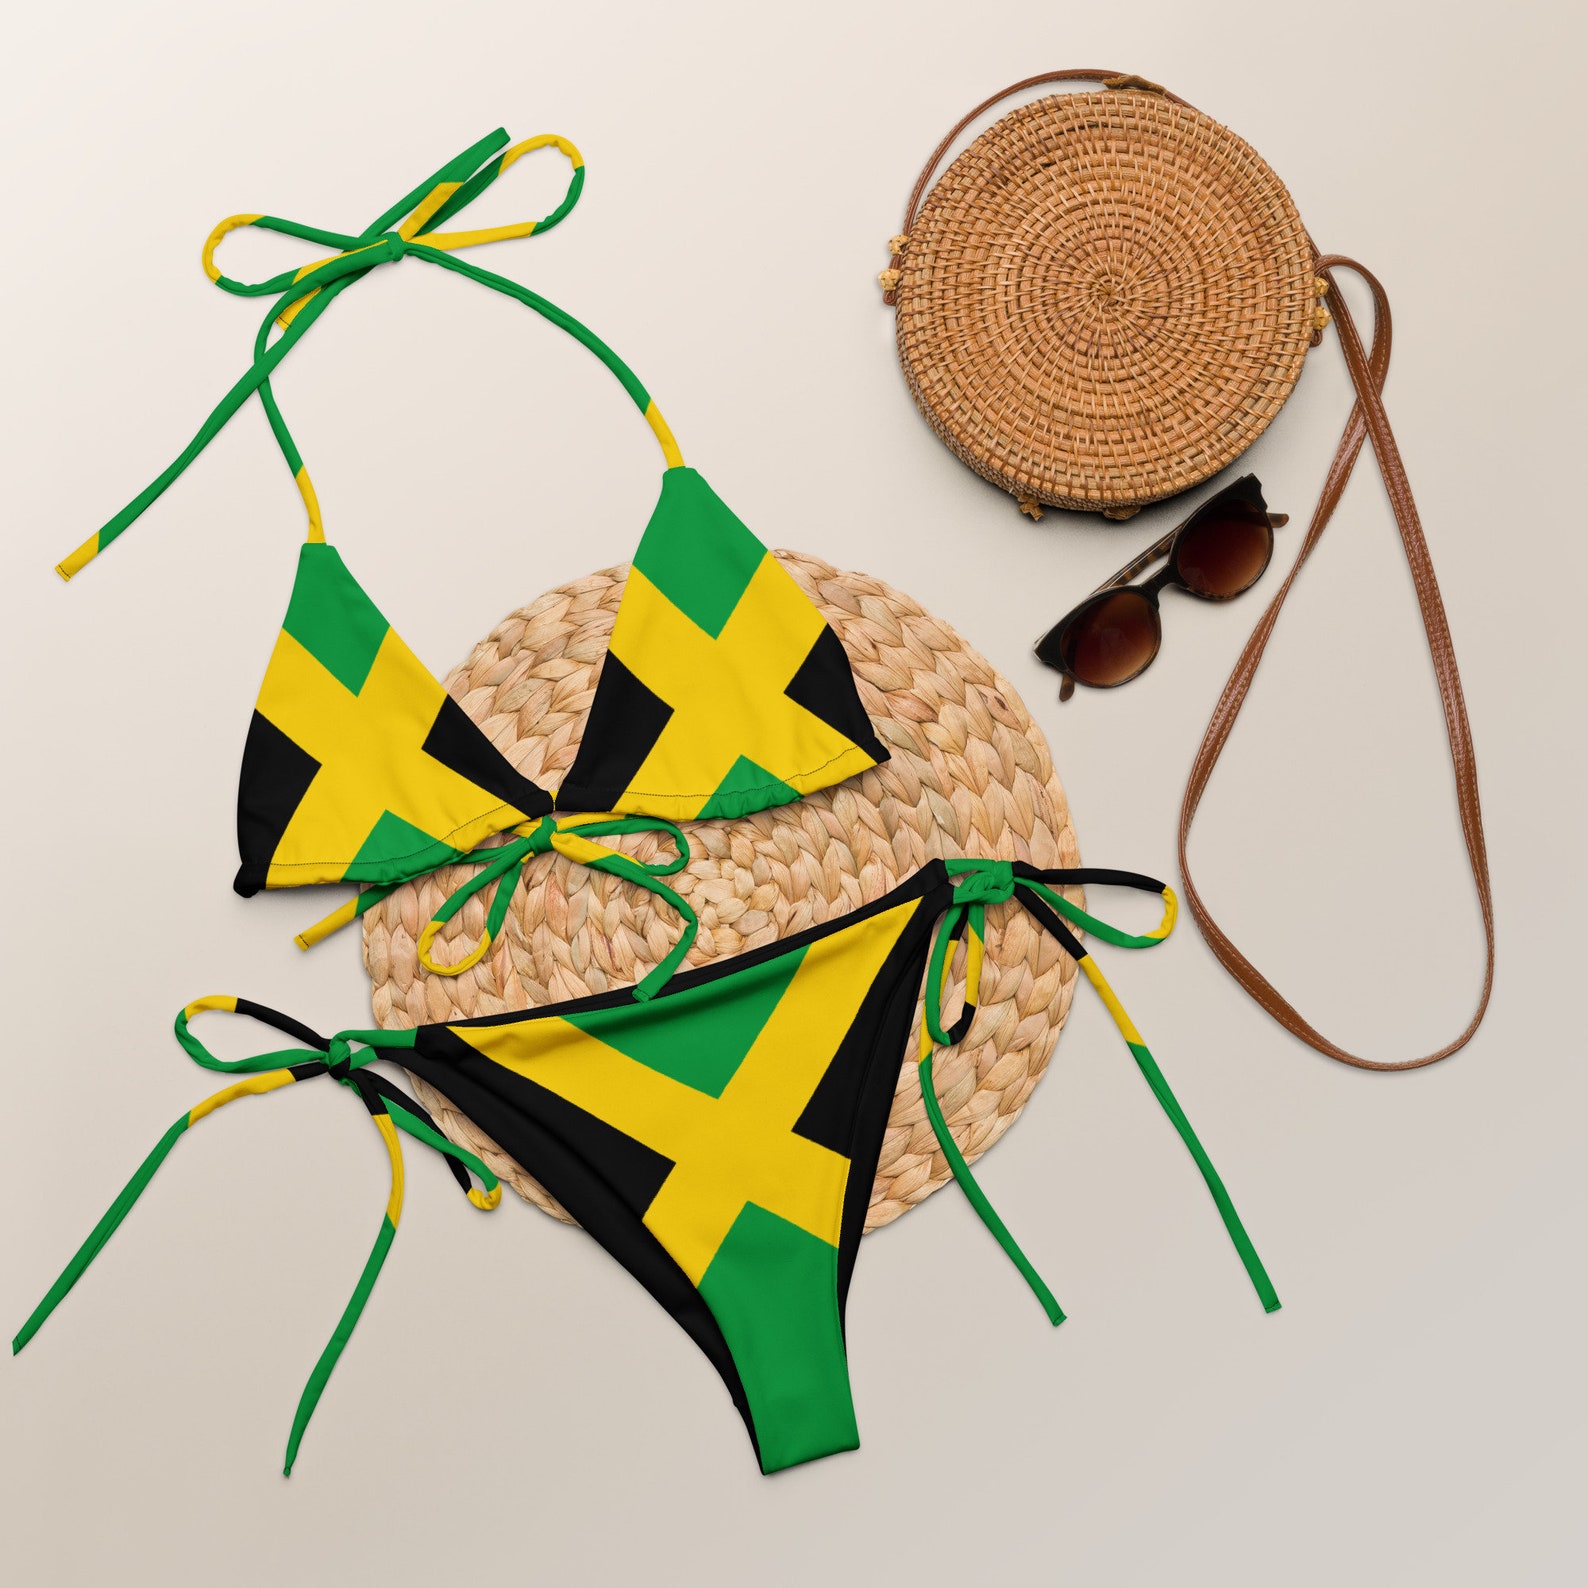 Jamaica String Bikini Large Bust Swimwear Jamaica Swimwear Jamaican Clothing Jamaican Flag